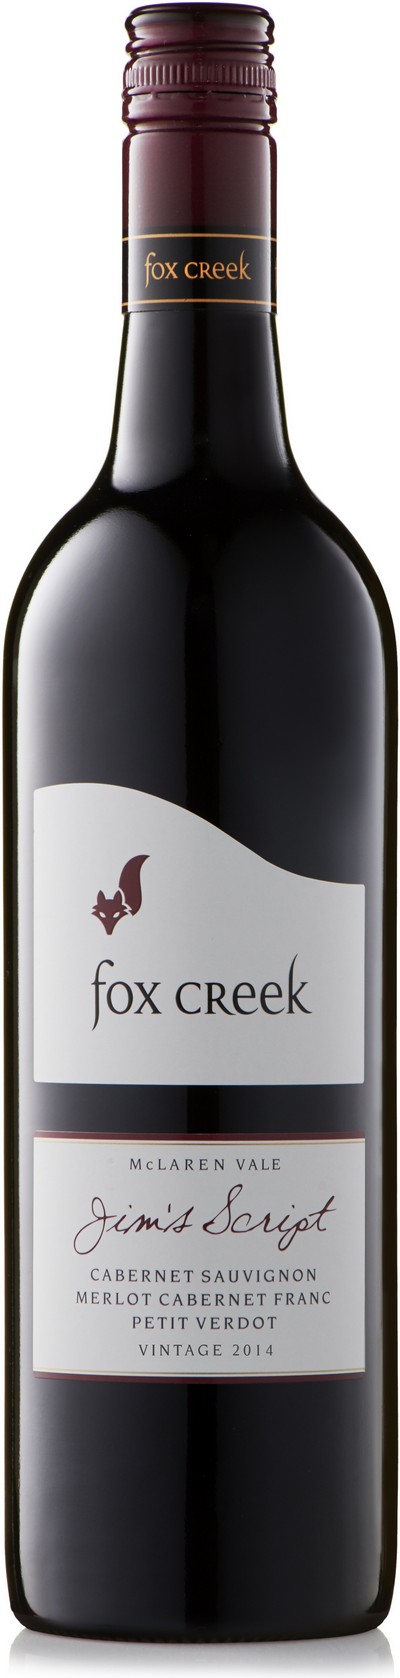 fox-creek-jims-script-cabernet-sauvignon-merlot-cabernet-franc-petit-verdot-2014